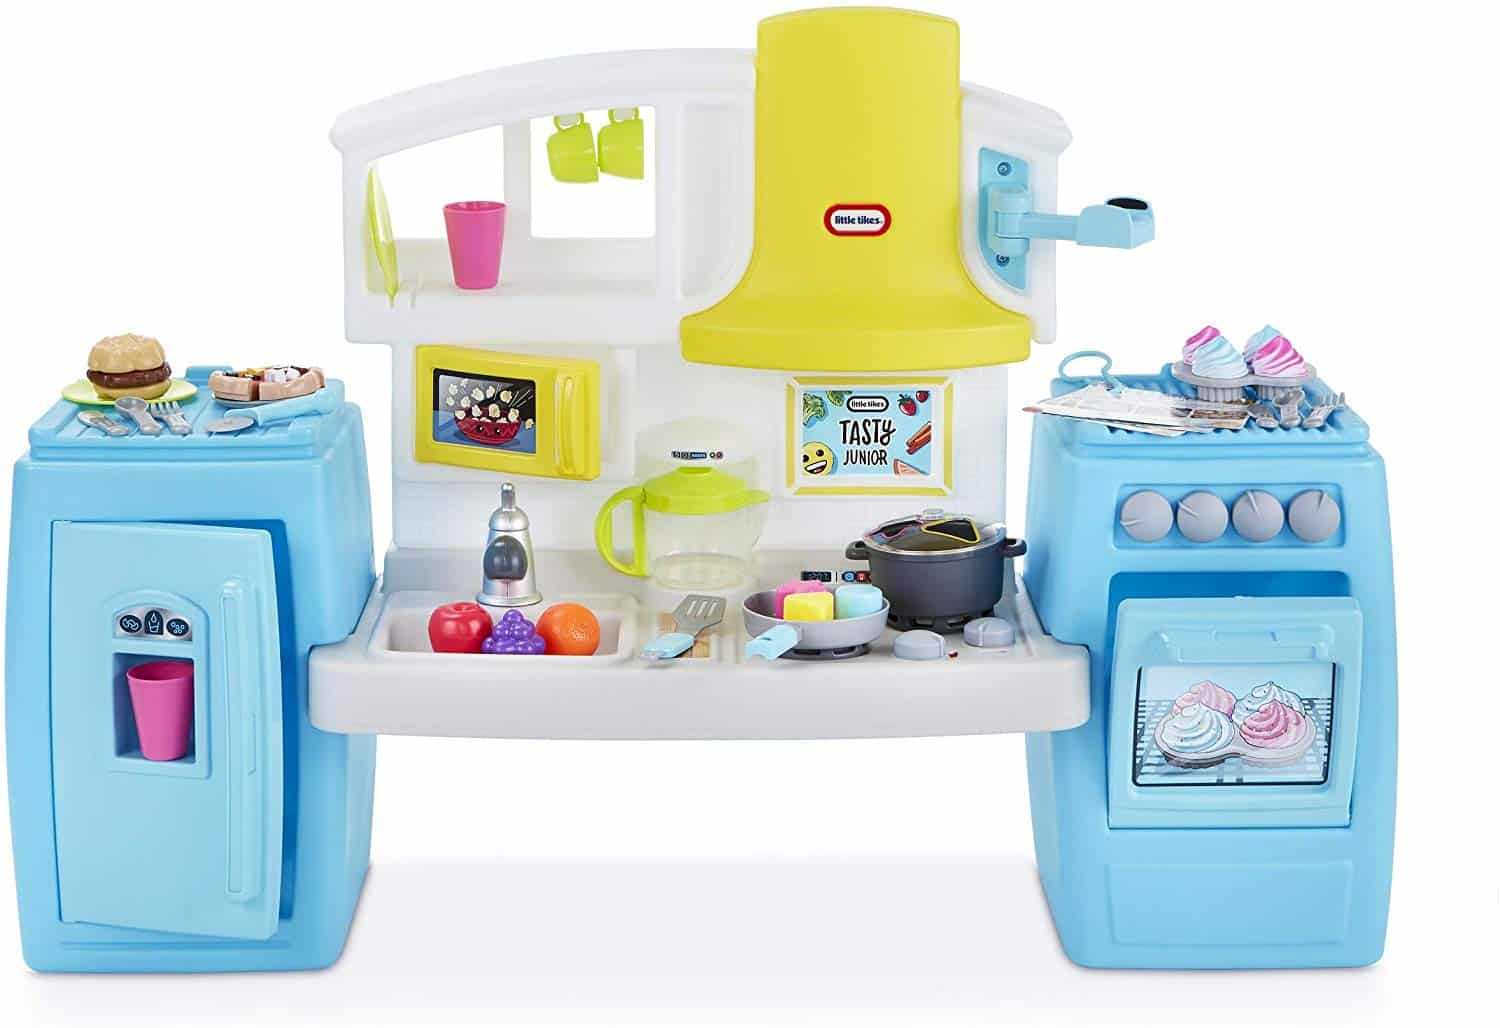 Little Tikes Tasty Jr. Bake ‘N Share Kitchen Role Play Kitchen & Activity Set 	$59.98 (REG $99.99)